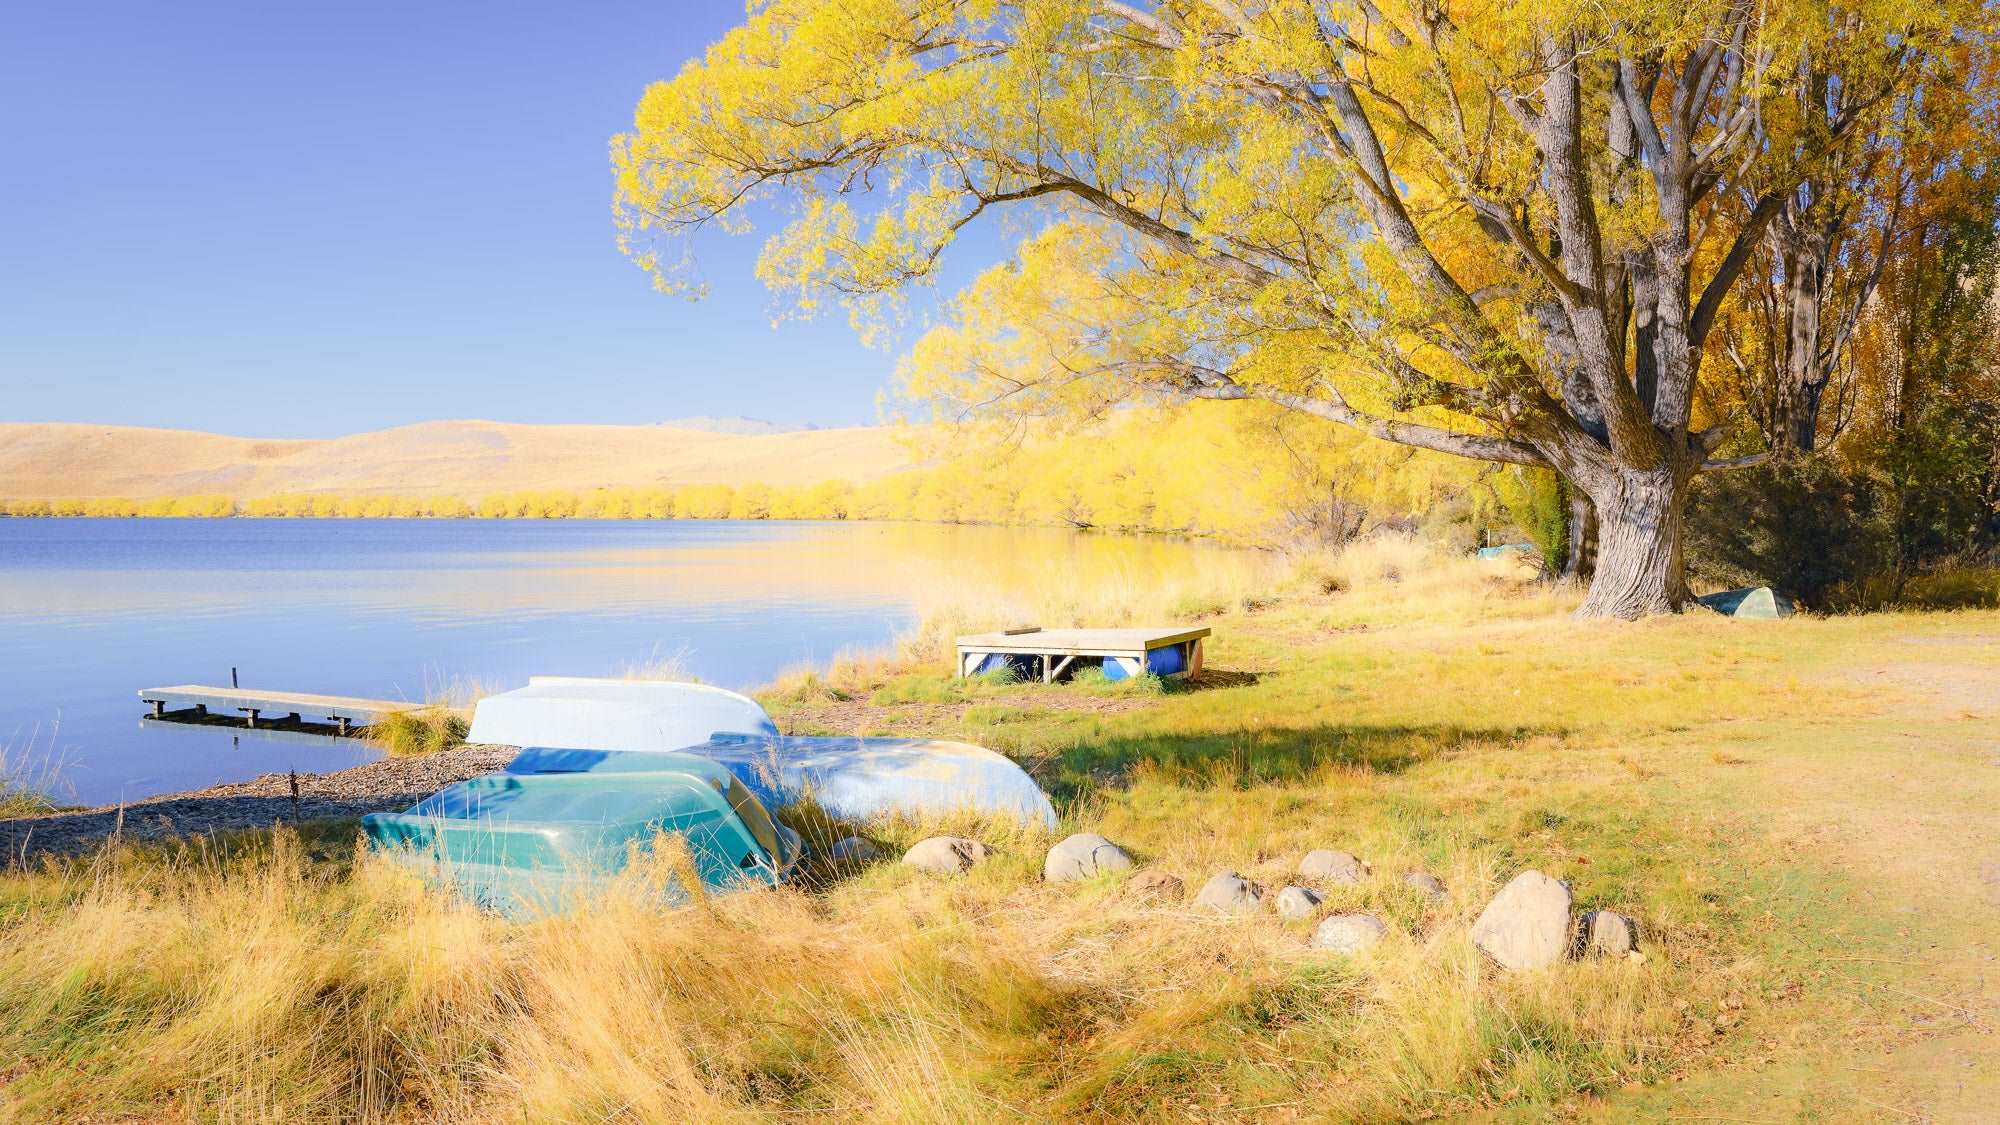 Autumn on the Lake - Lake Alexandrina - by Award Winning New Zealand Landscape Photographer Stephen Milner